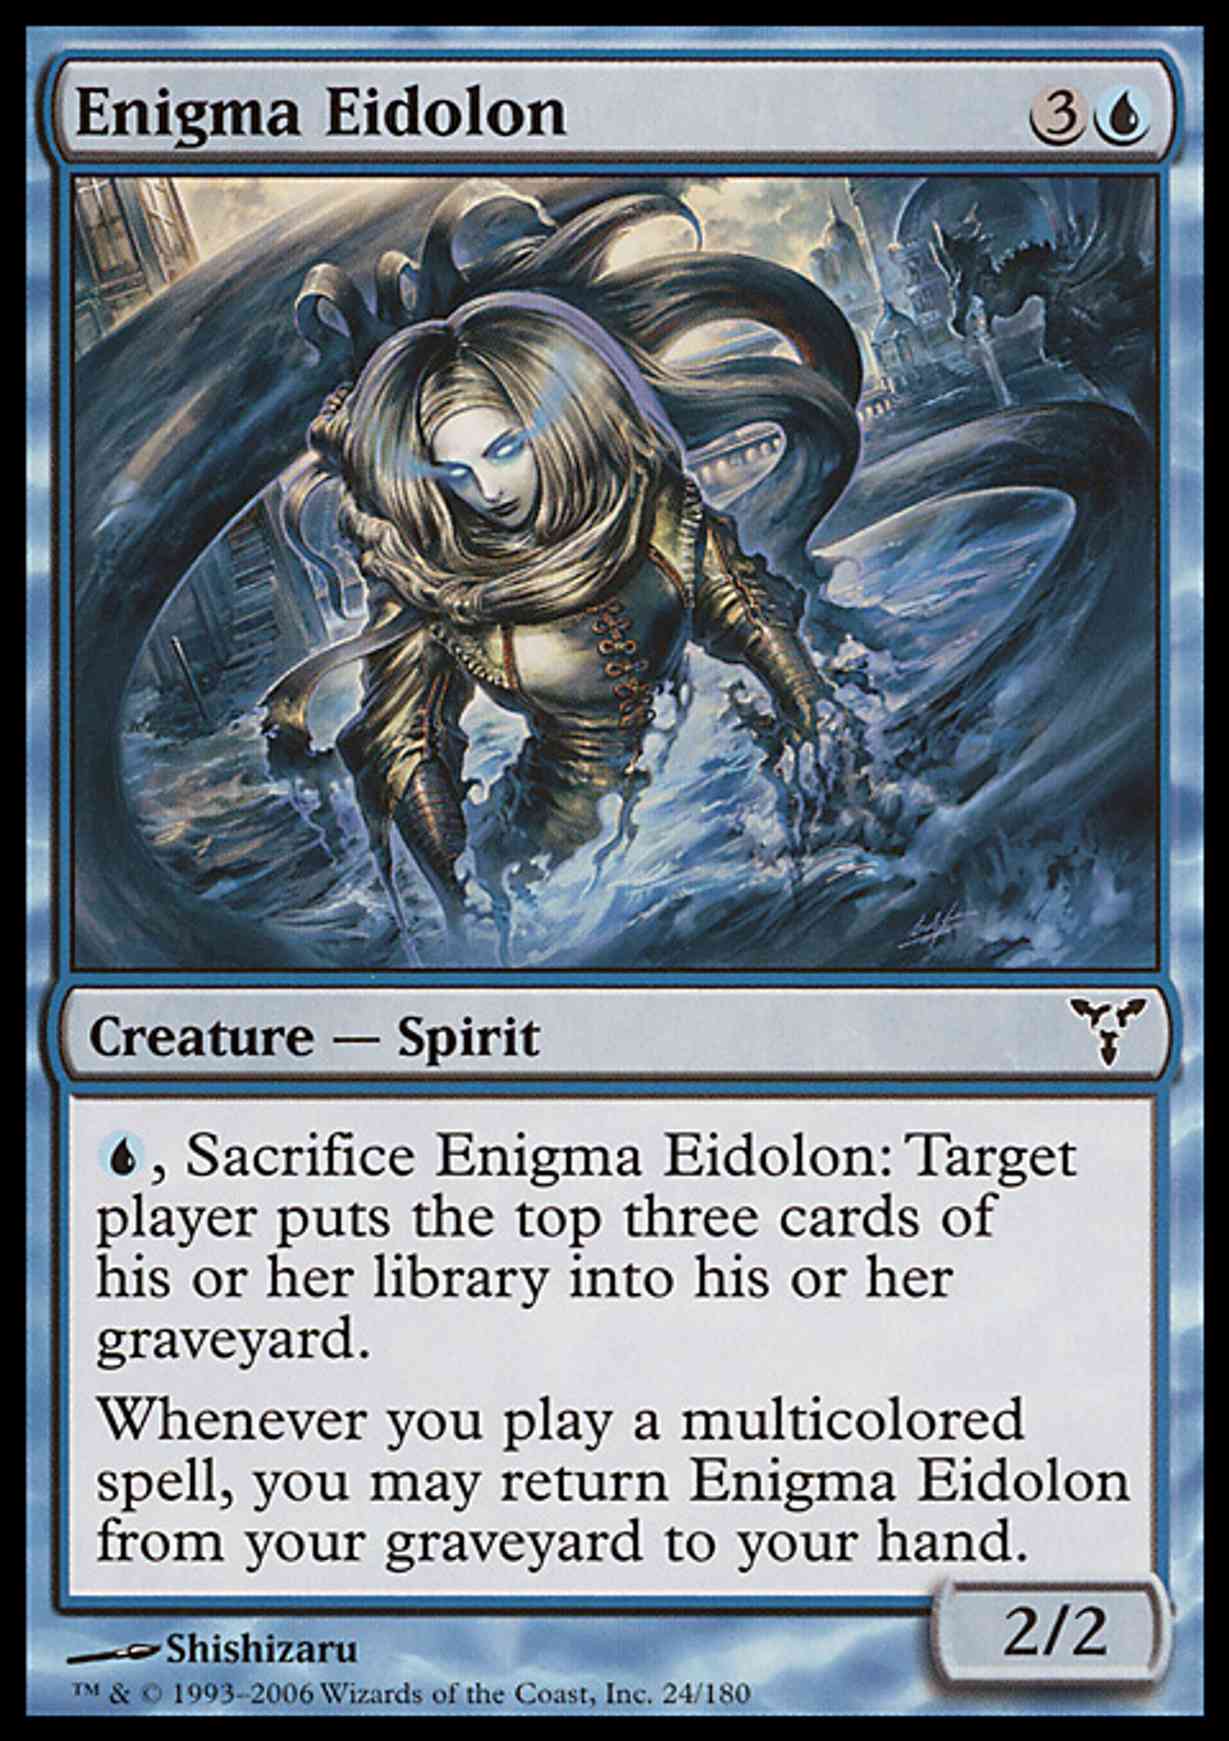 Enigma Eidolon magic card front